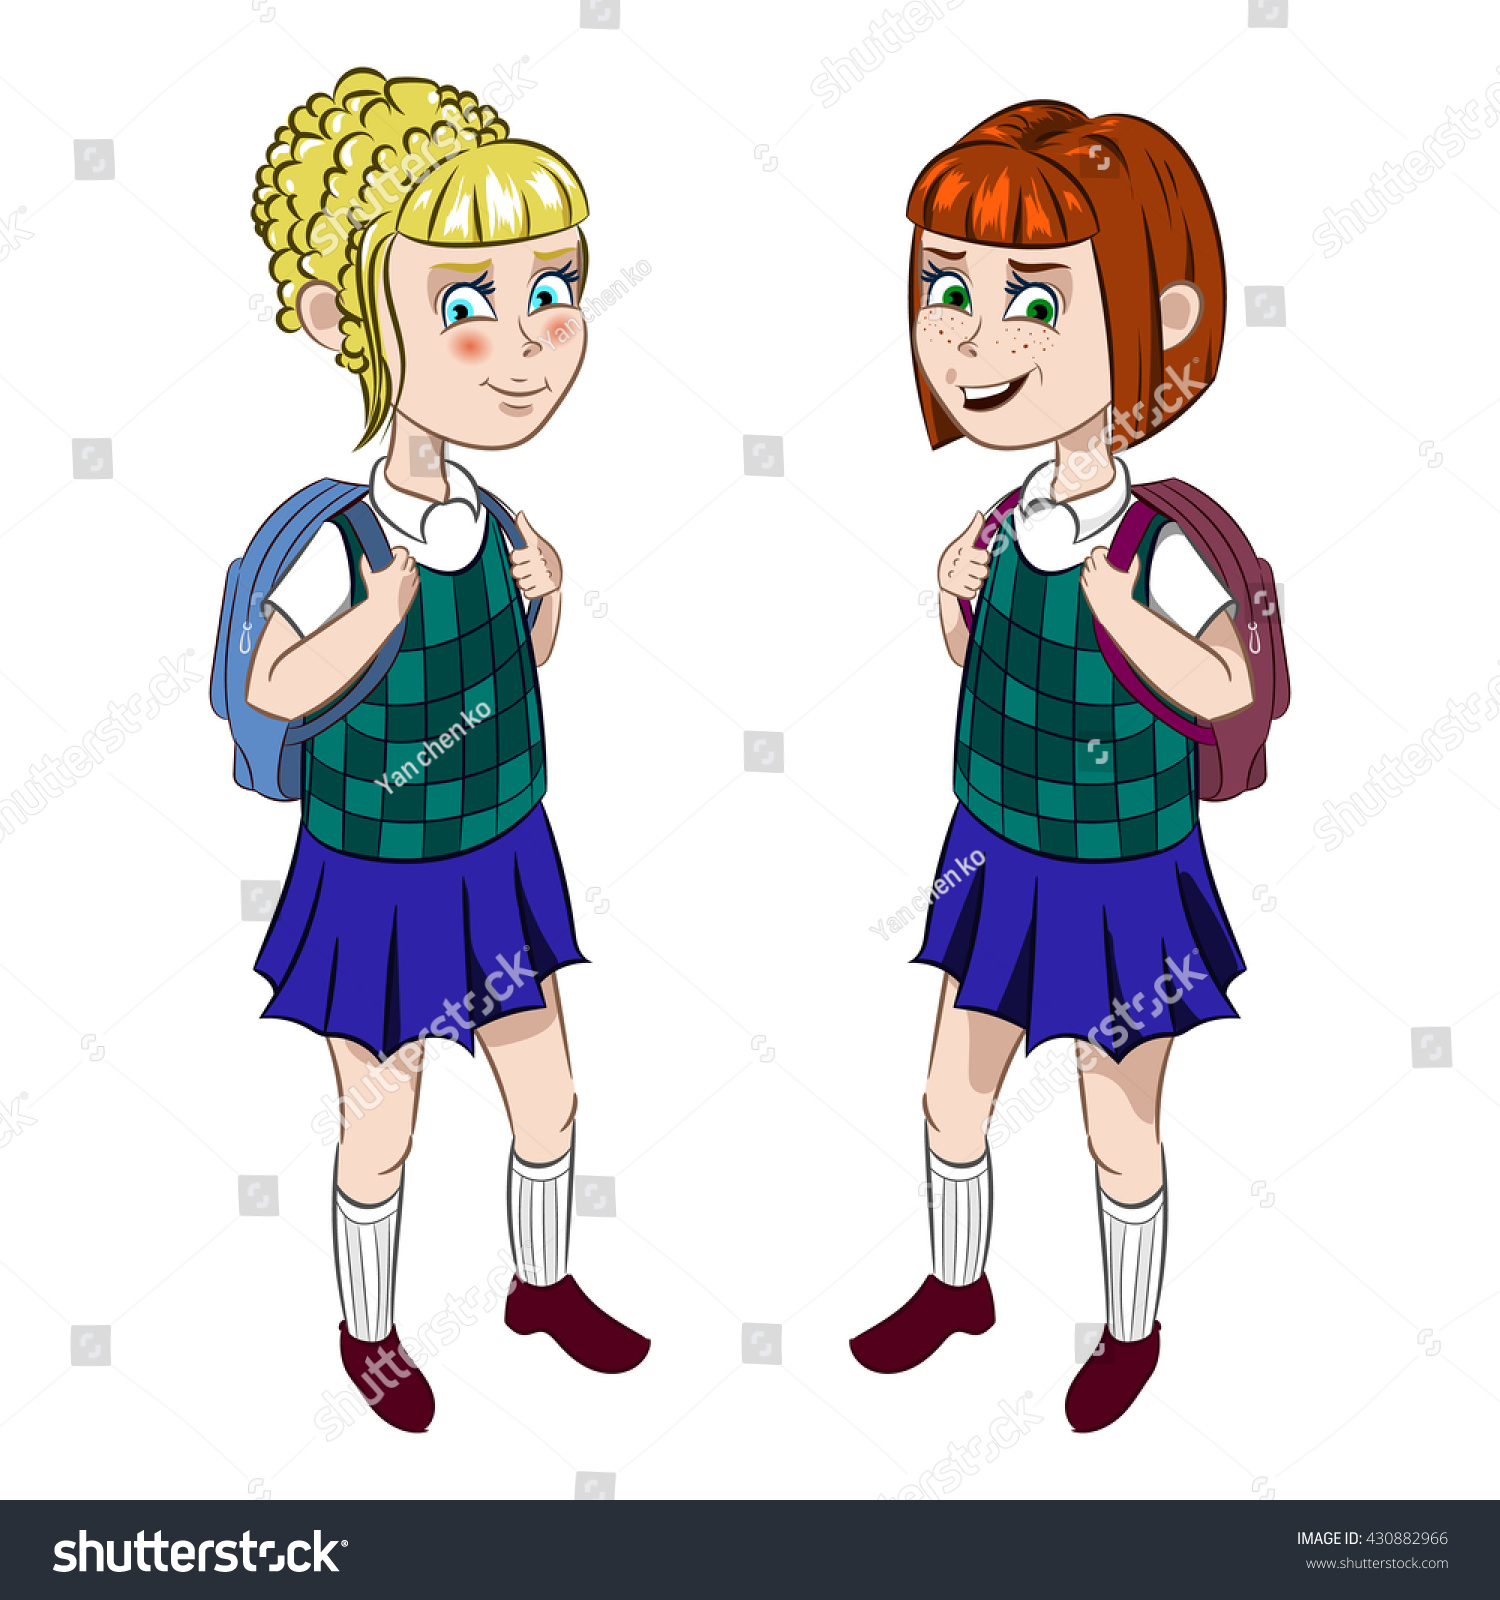 Cartoon two girls